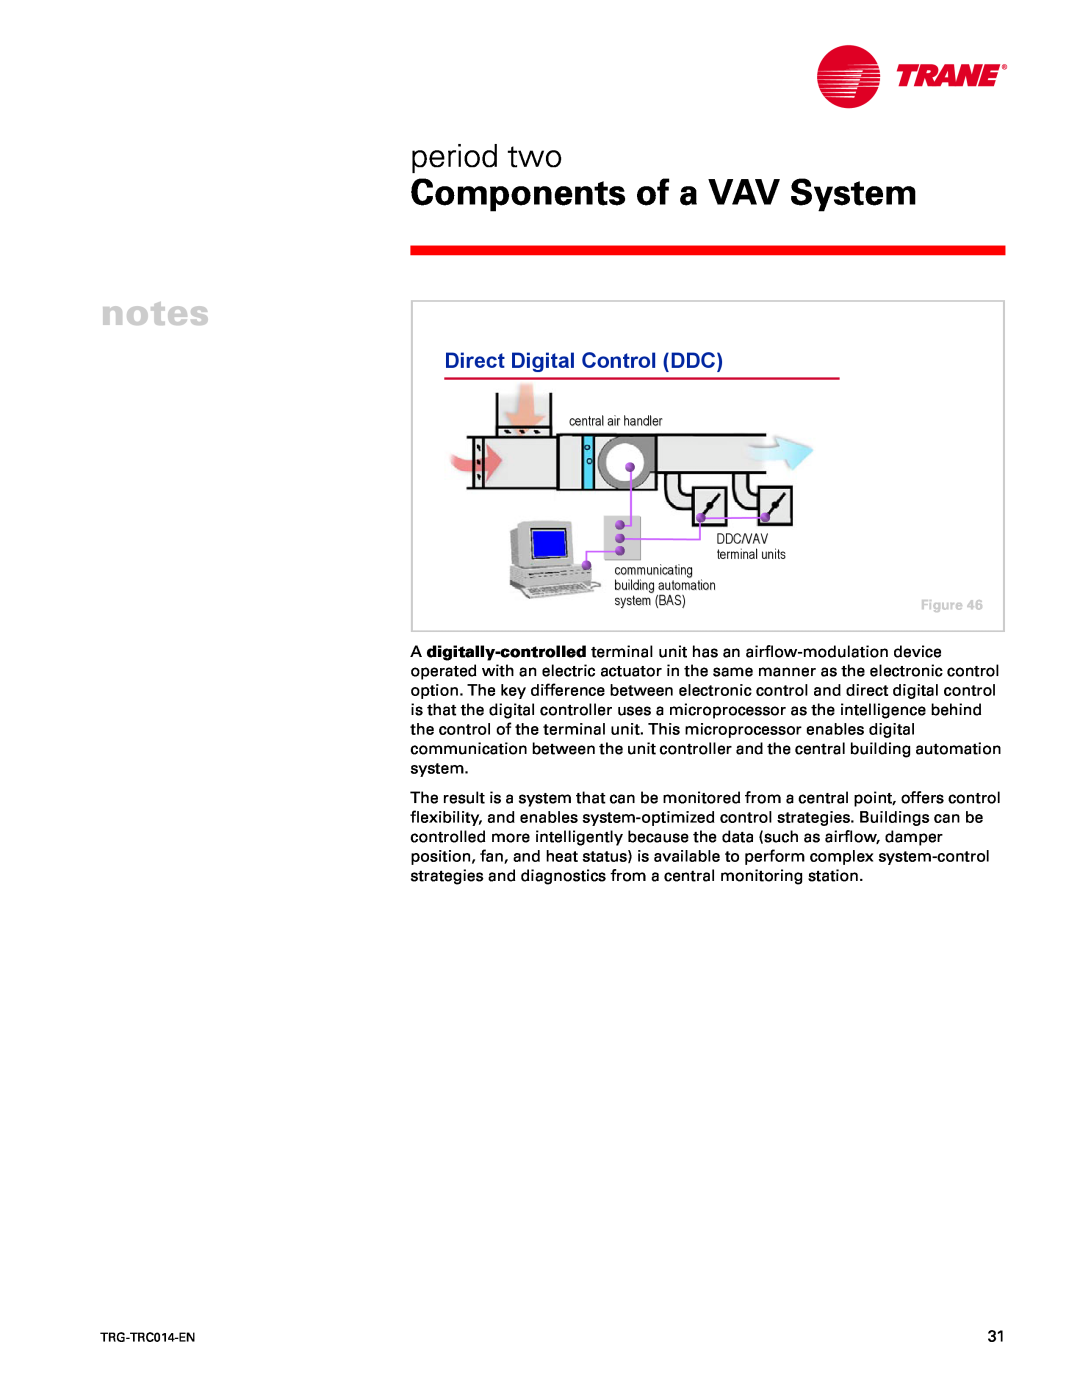 Trane TRG-TRC014-EN manual Direct Digital Control DDC, Components of a VAV System, period two 